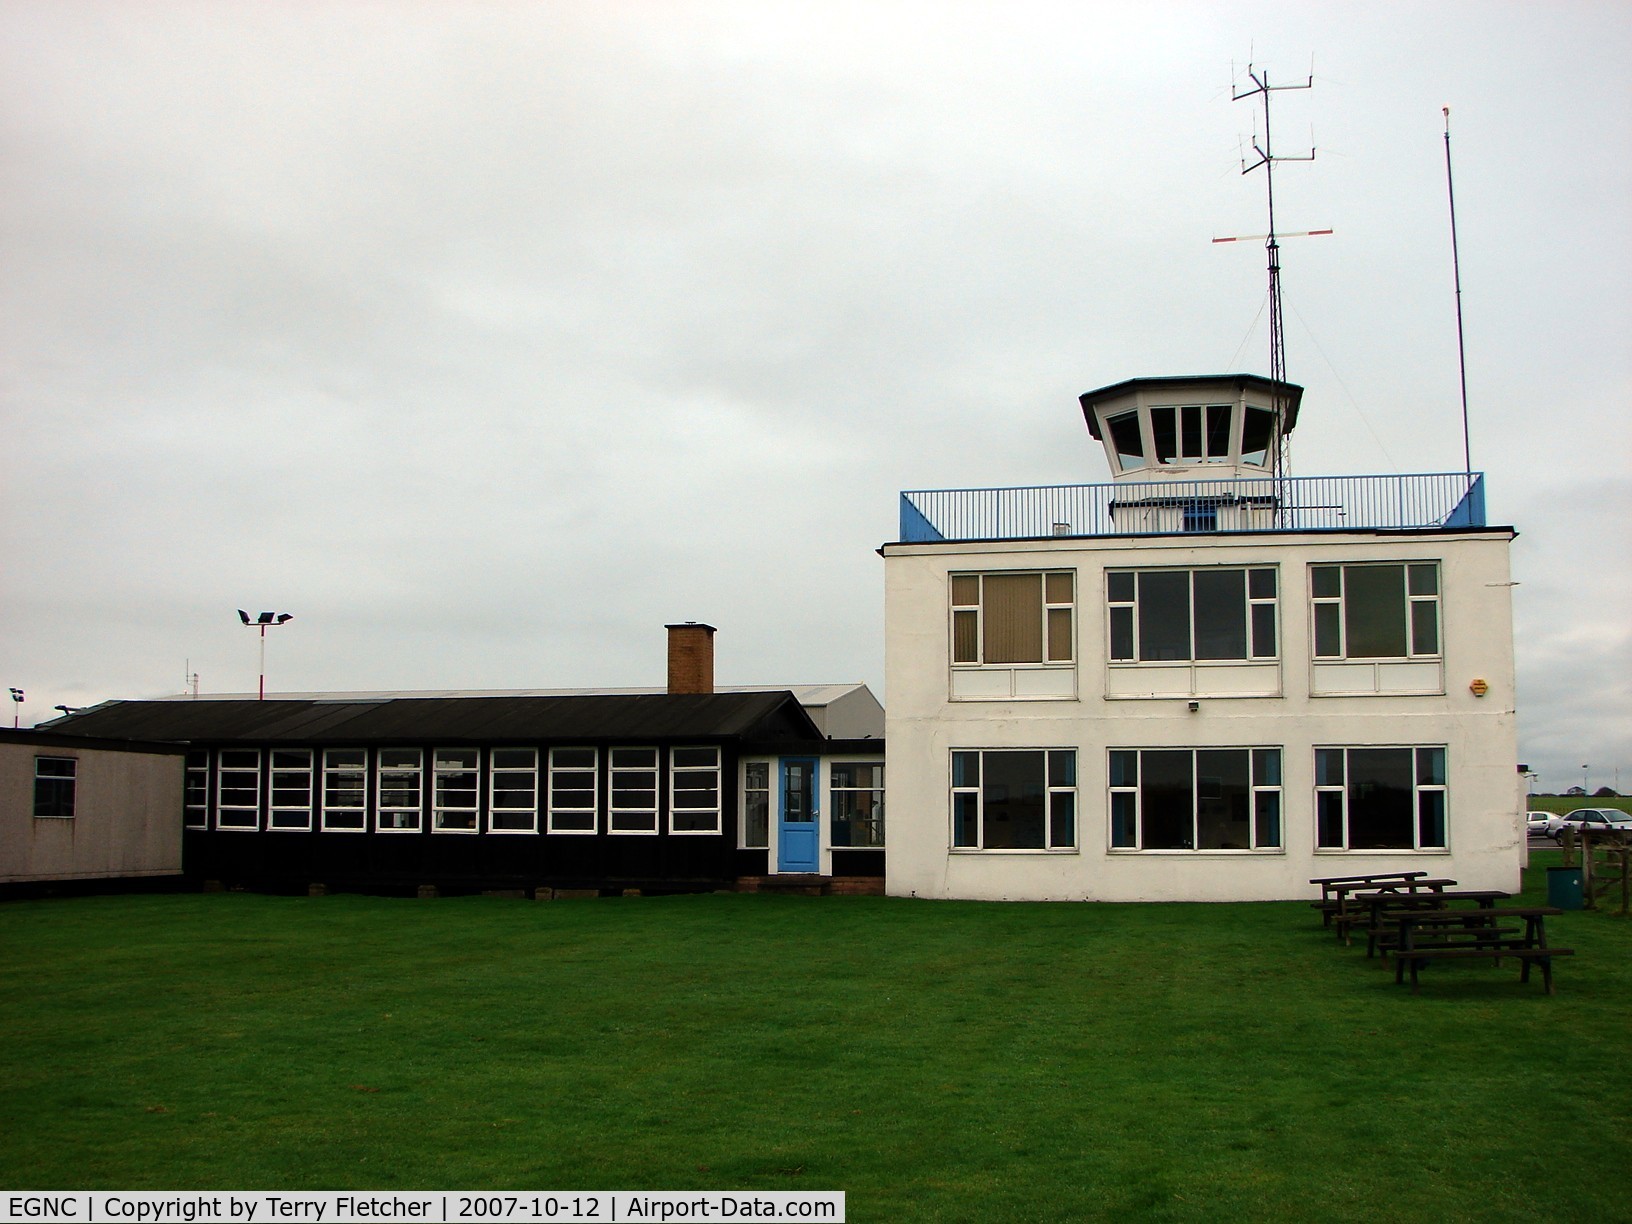 Carlisle Airport, Carlisle, England United Kingdom (EGNC) - Tower and Passenger Terminal